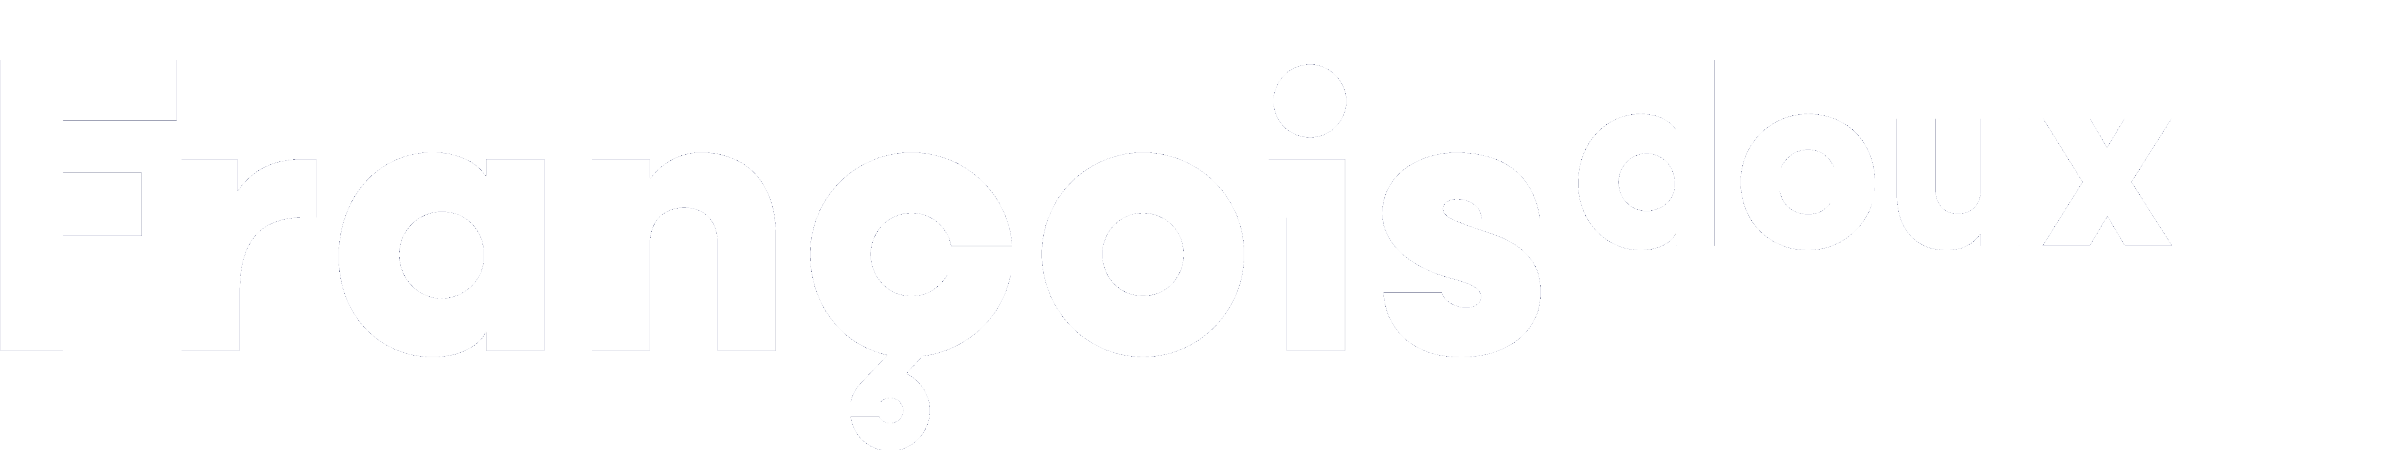 francois deux logo